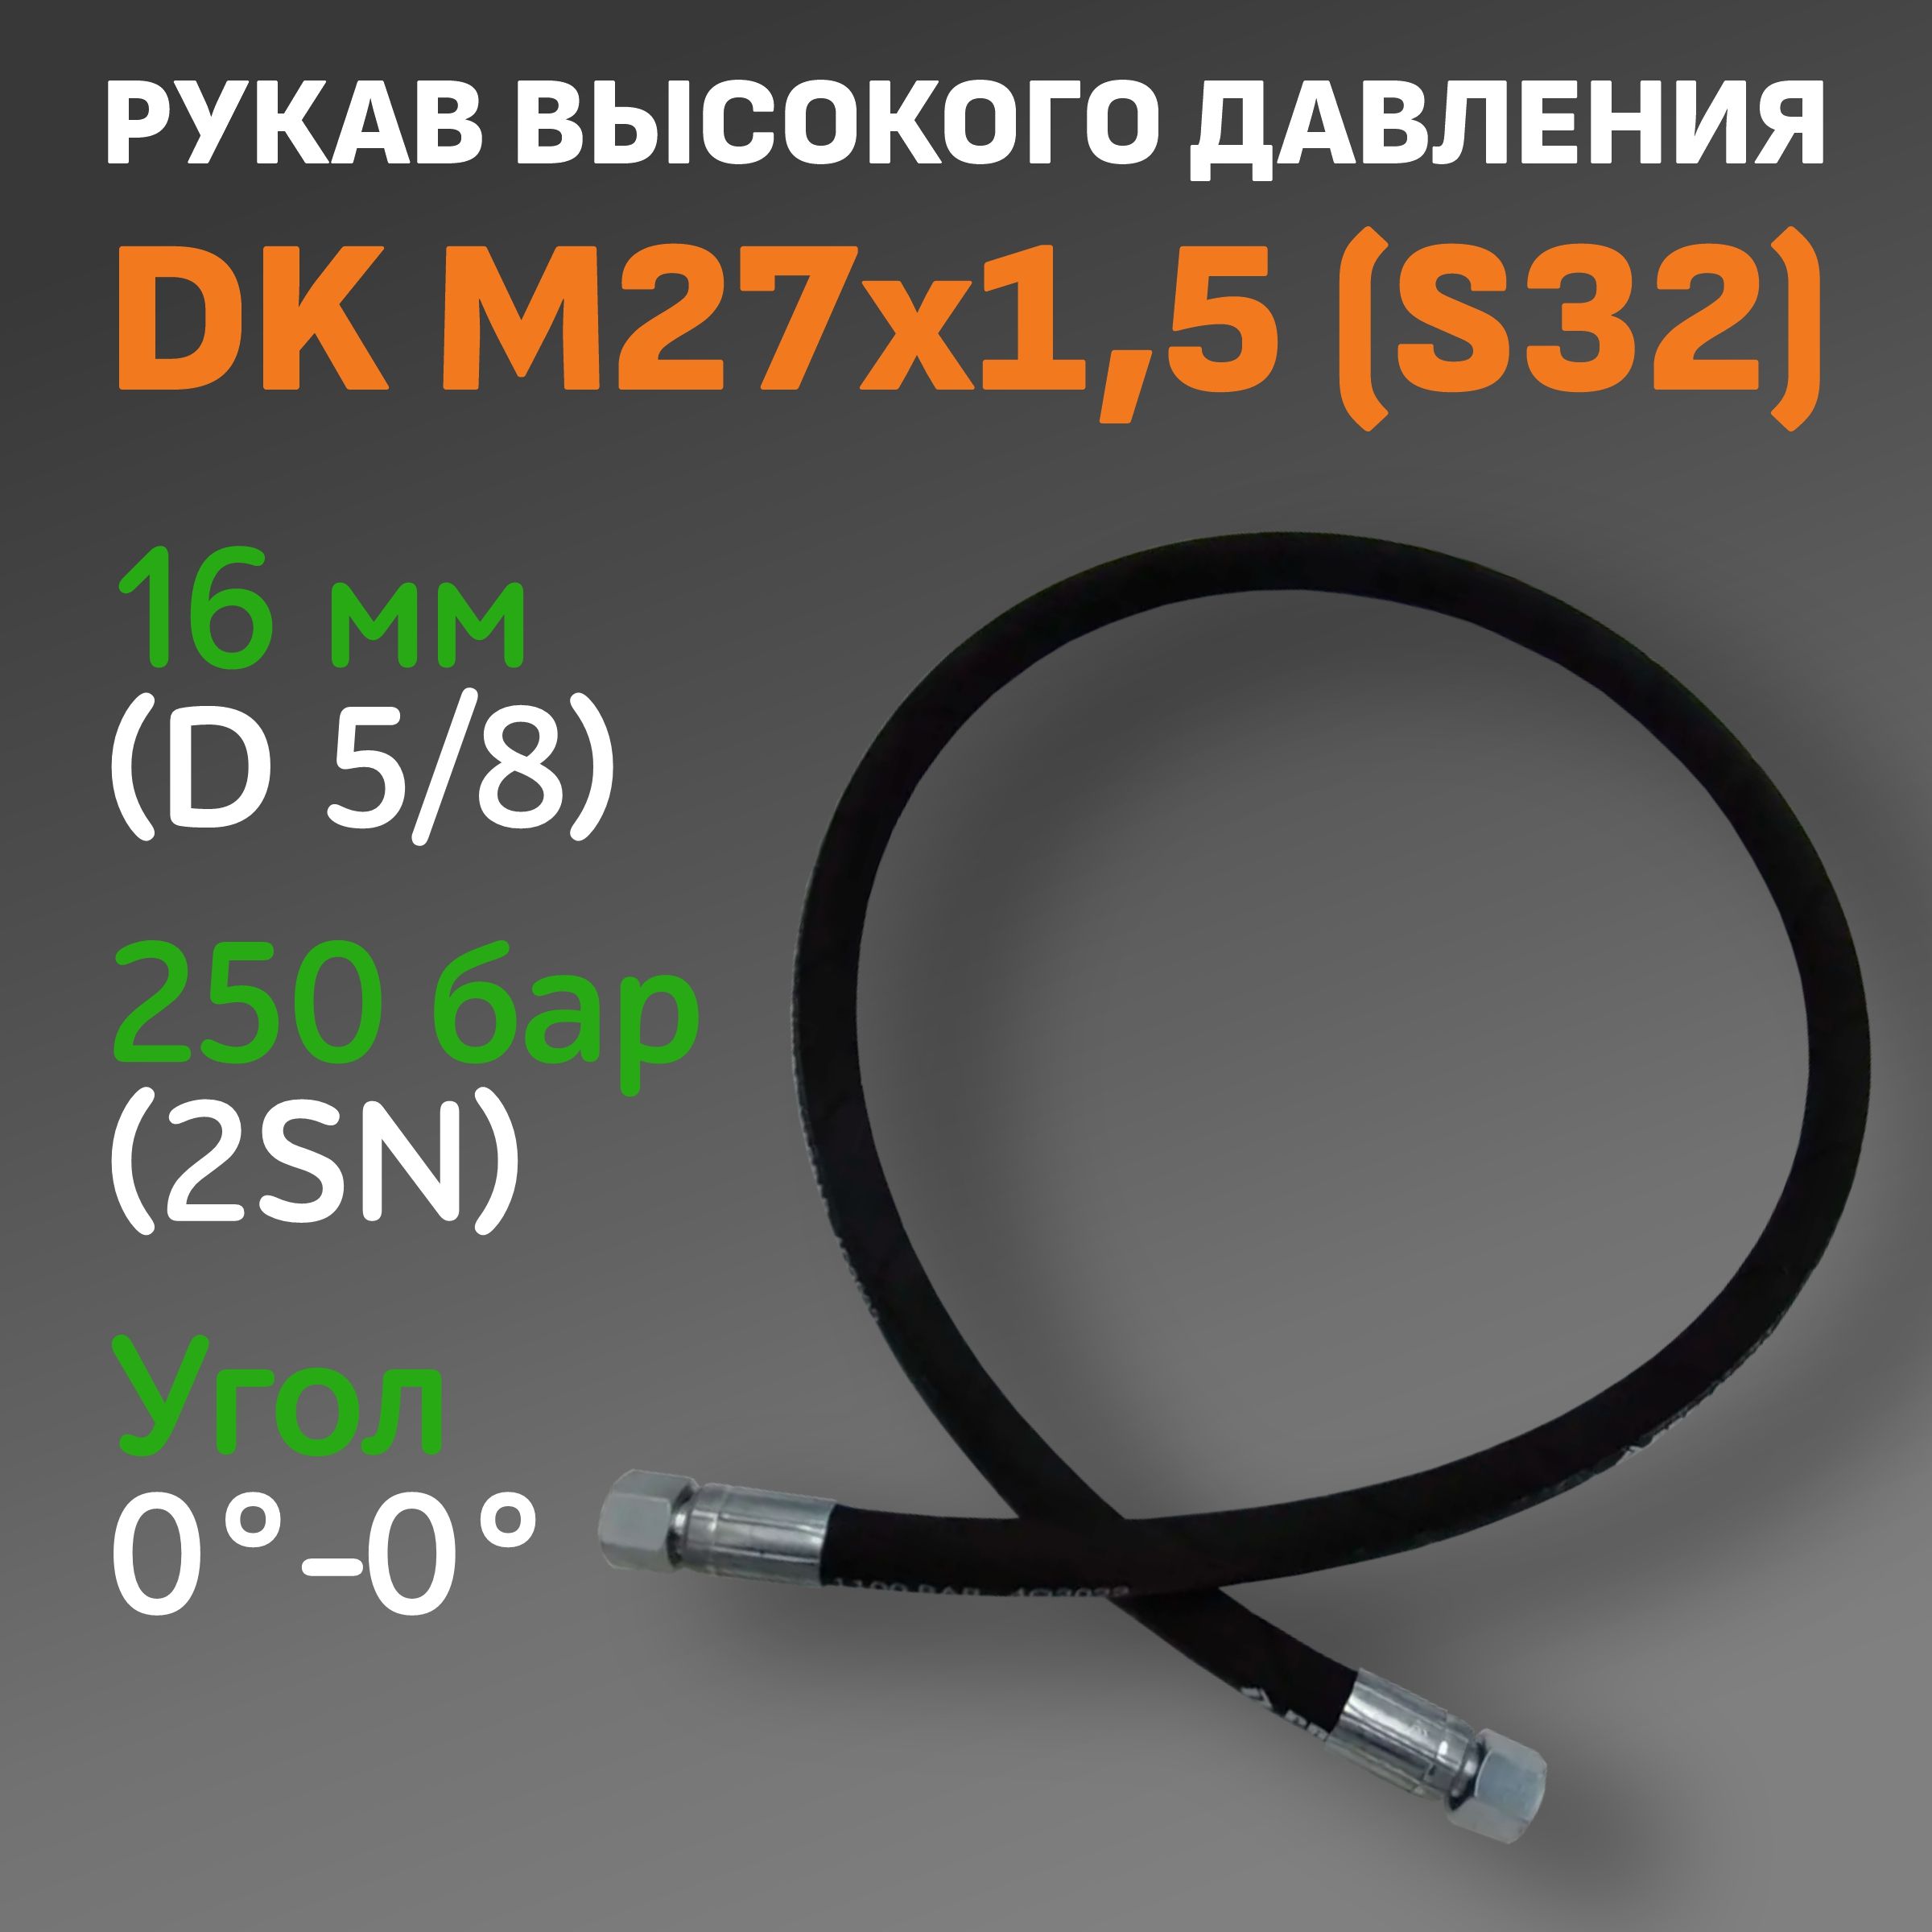 РВДшланггидравлический2SN-16мм-1800ммS(ключ)32(M27x1.5)DK250BAR/МТЗрукаввысокогодавления